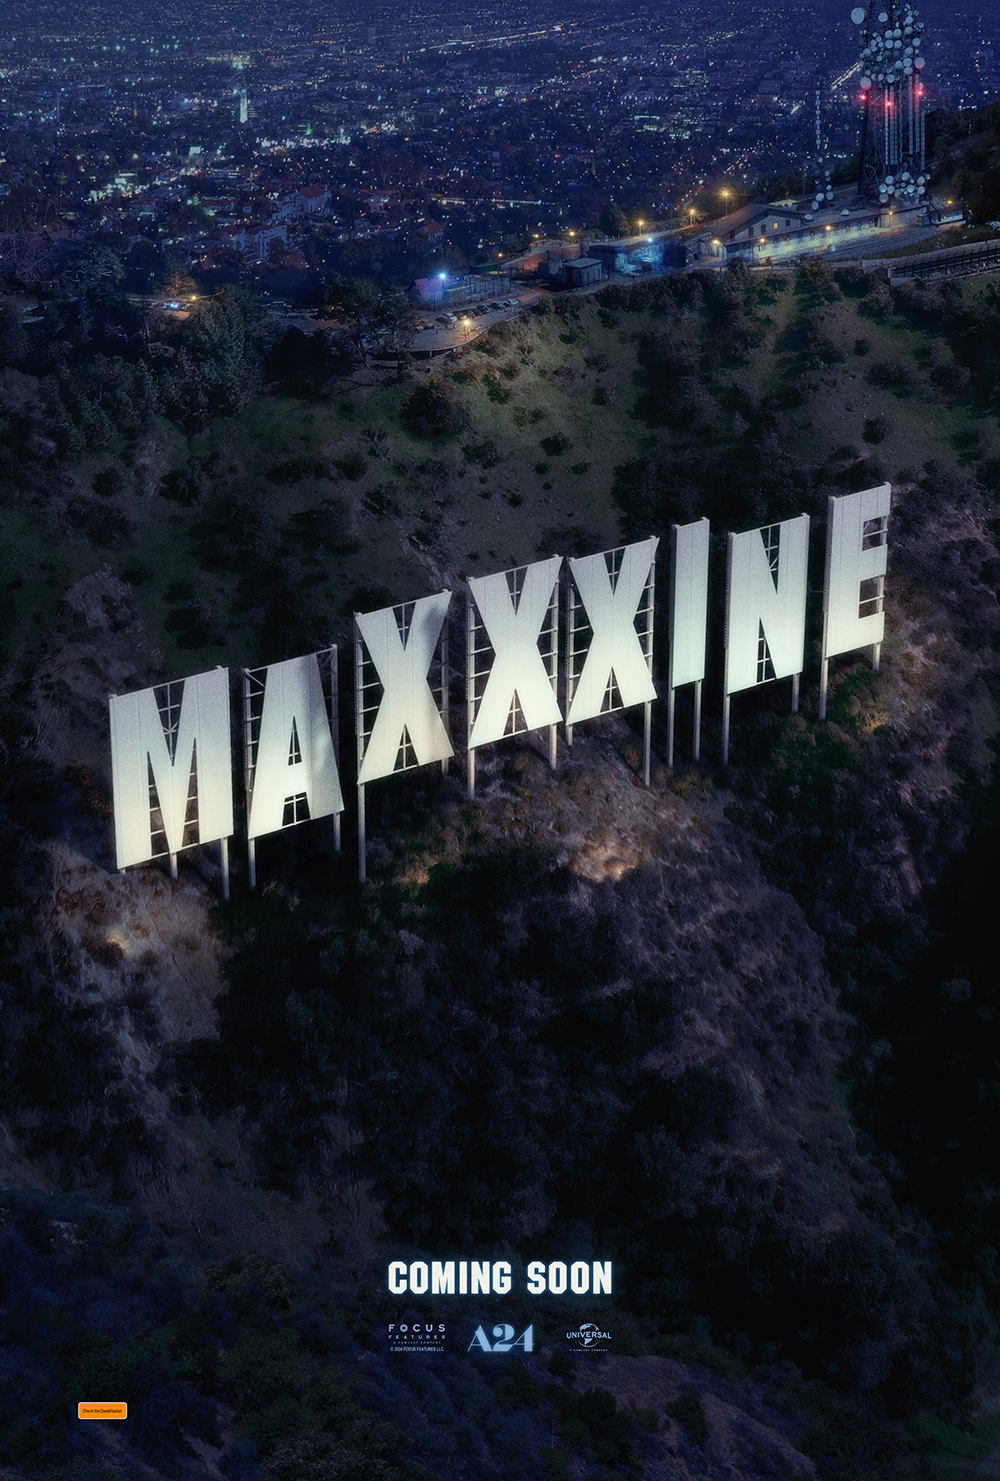 Maxxxine